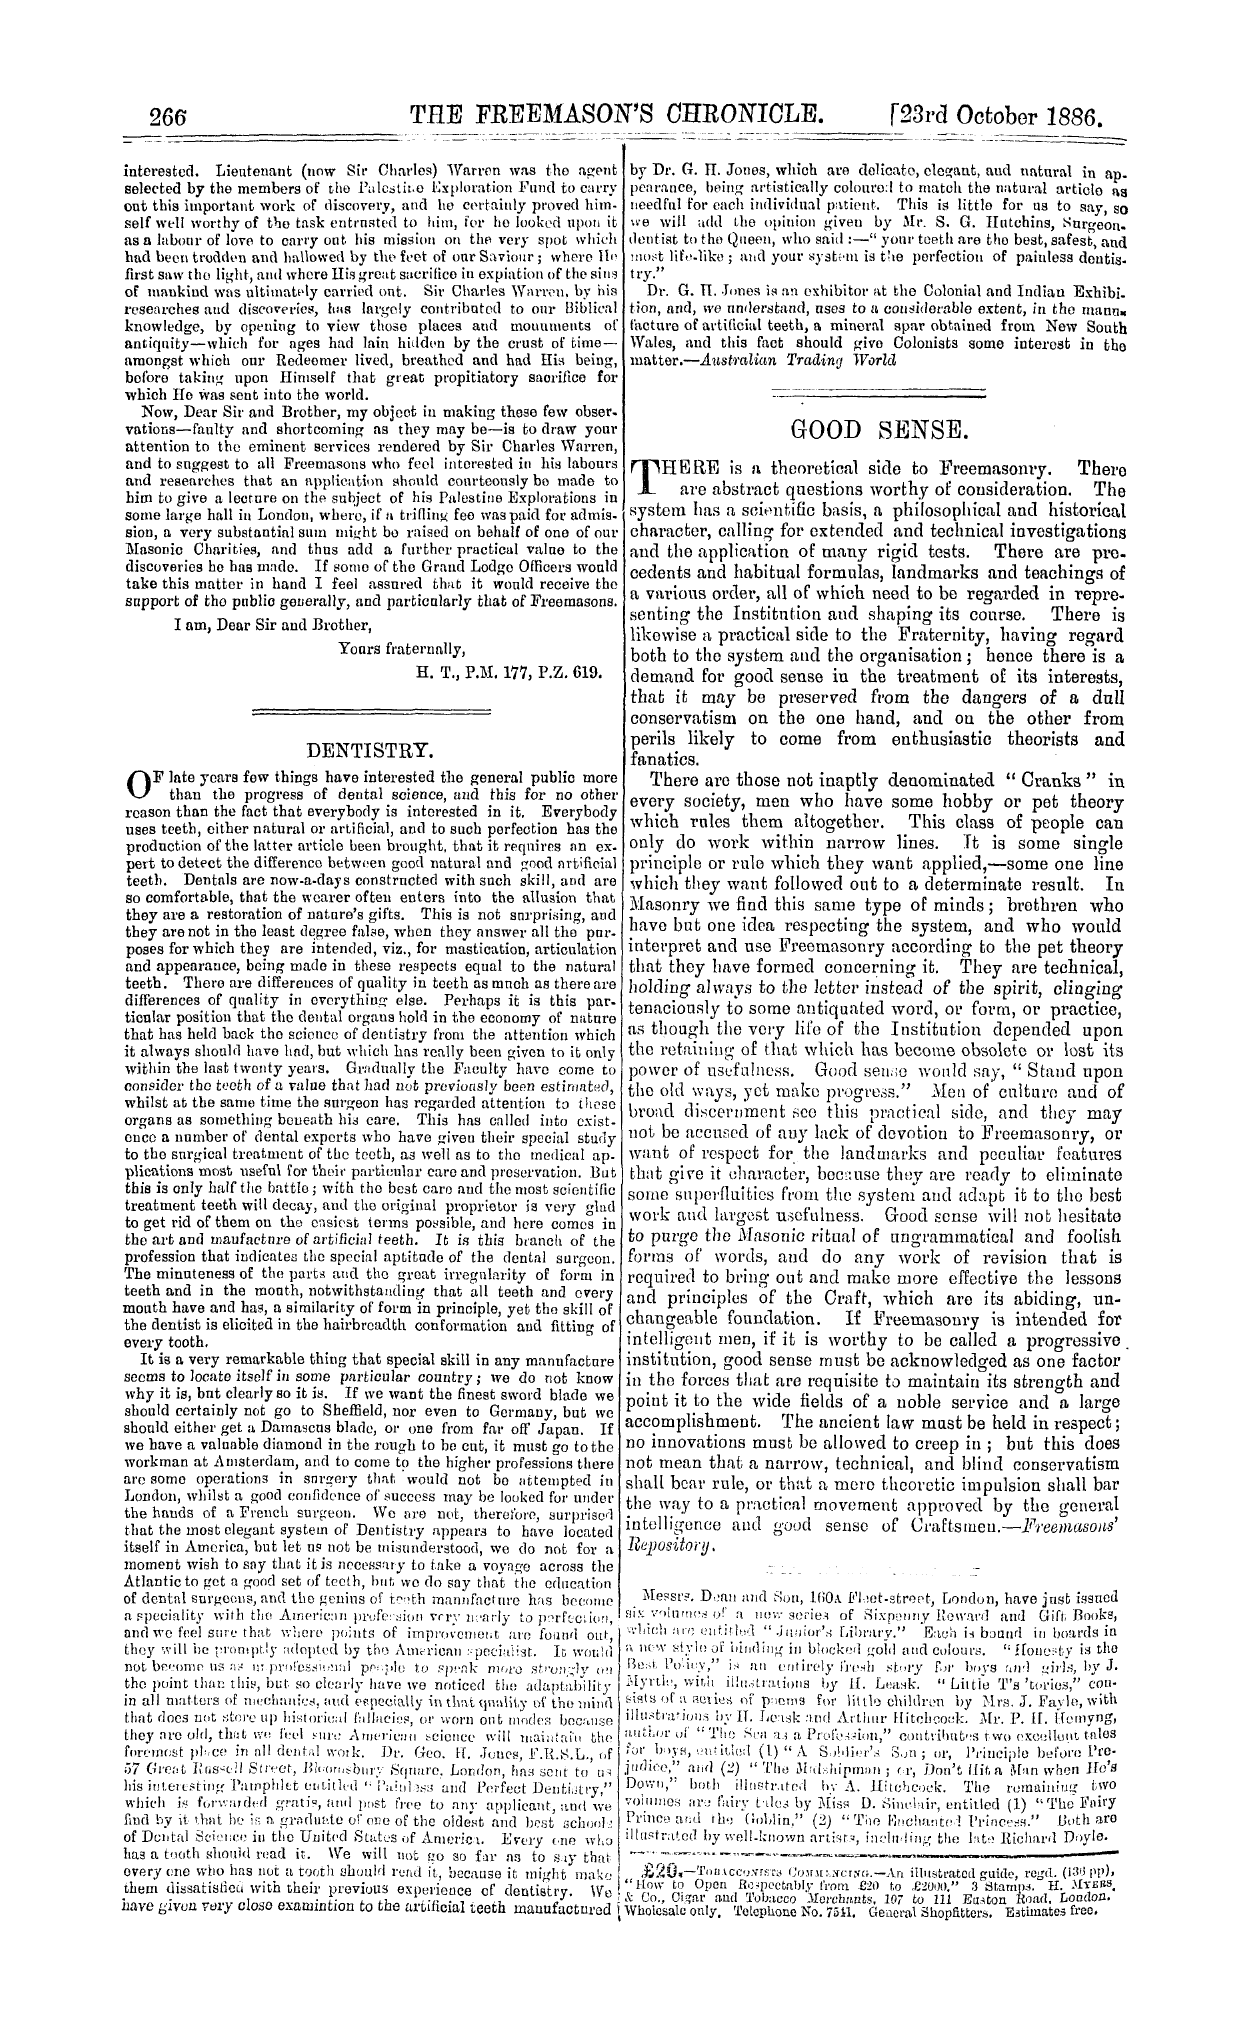 The Freemason's Chronicle: 1886-10-23 - Palestine Exploration Fund.